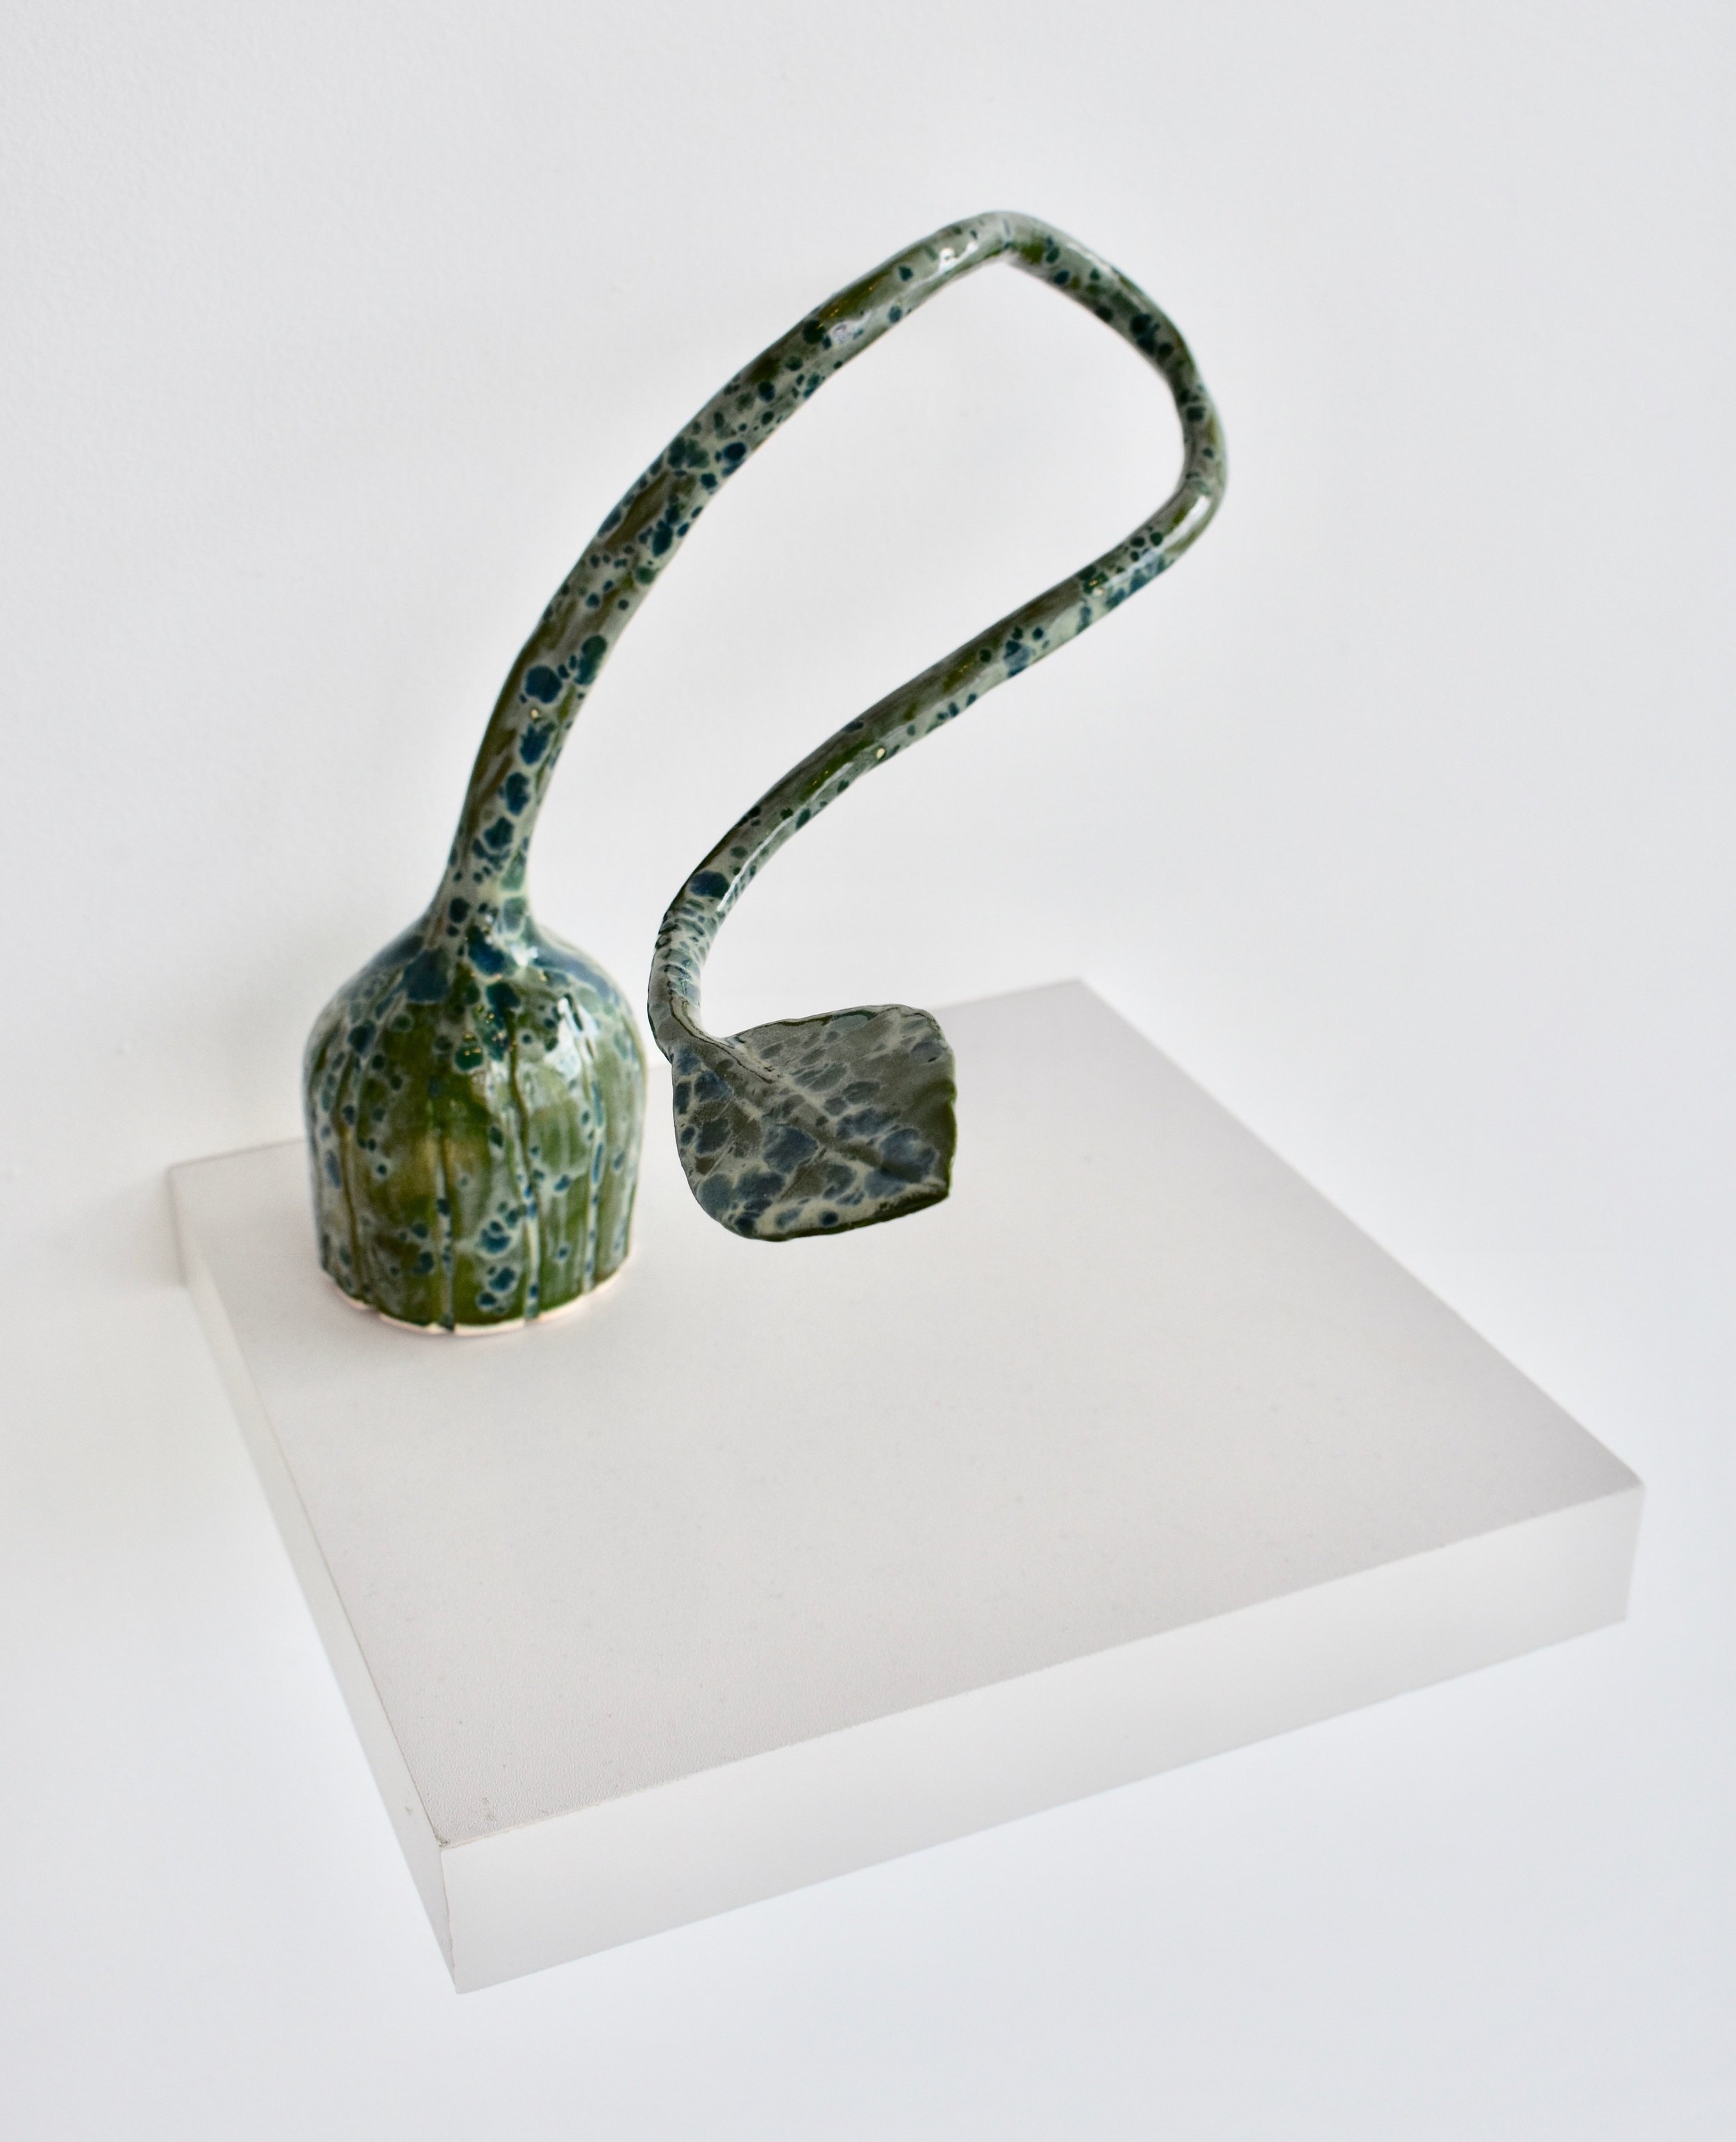  Emily Brodrick, “ Ceramic Sprout No. 3”   Glazed white stoneware, 13 x 6 x 4 inches 